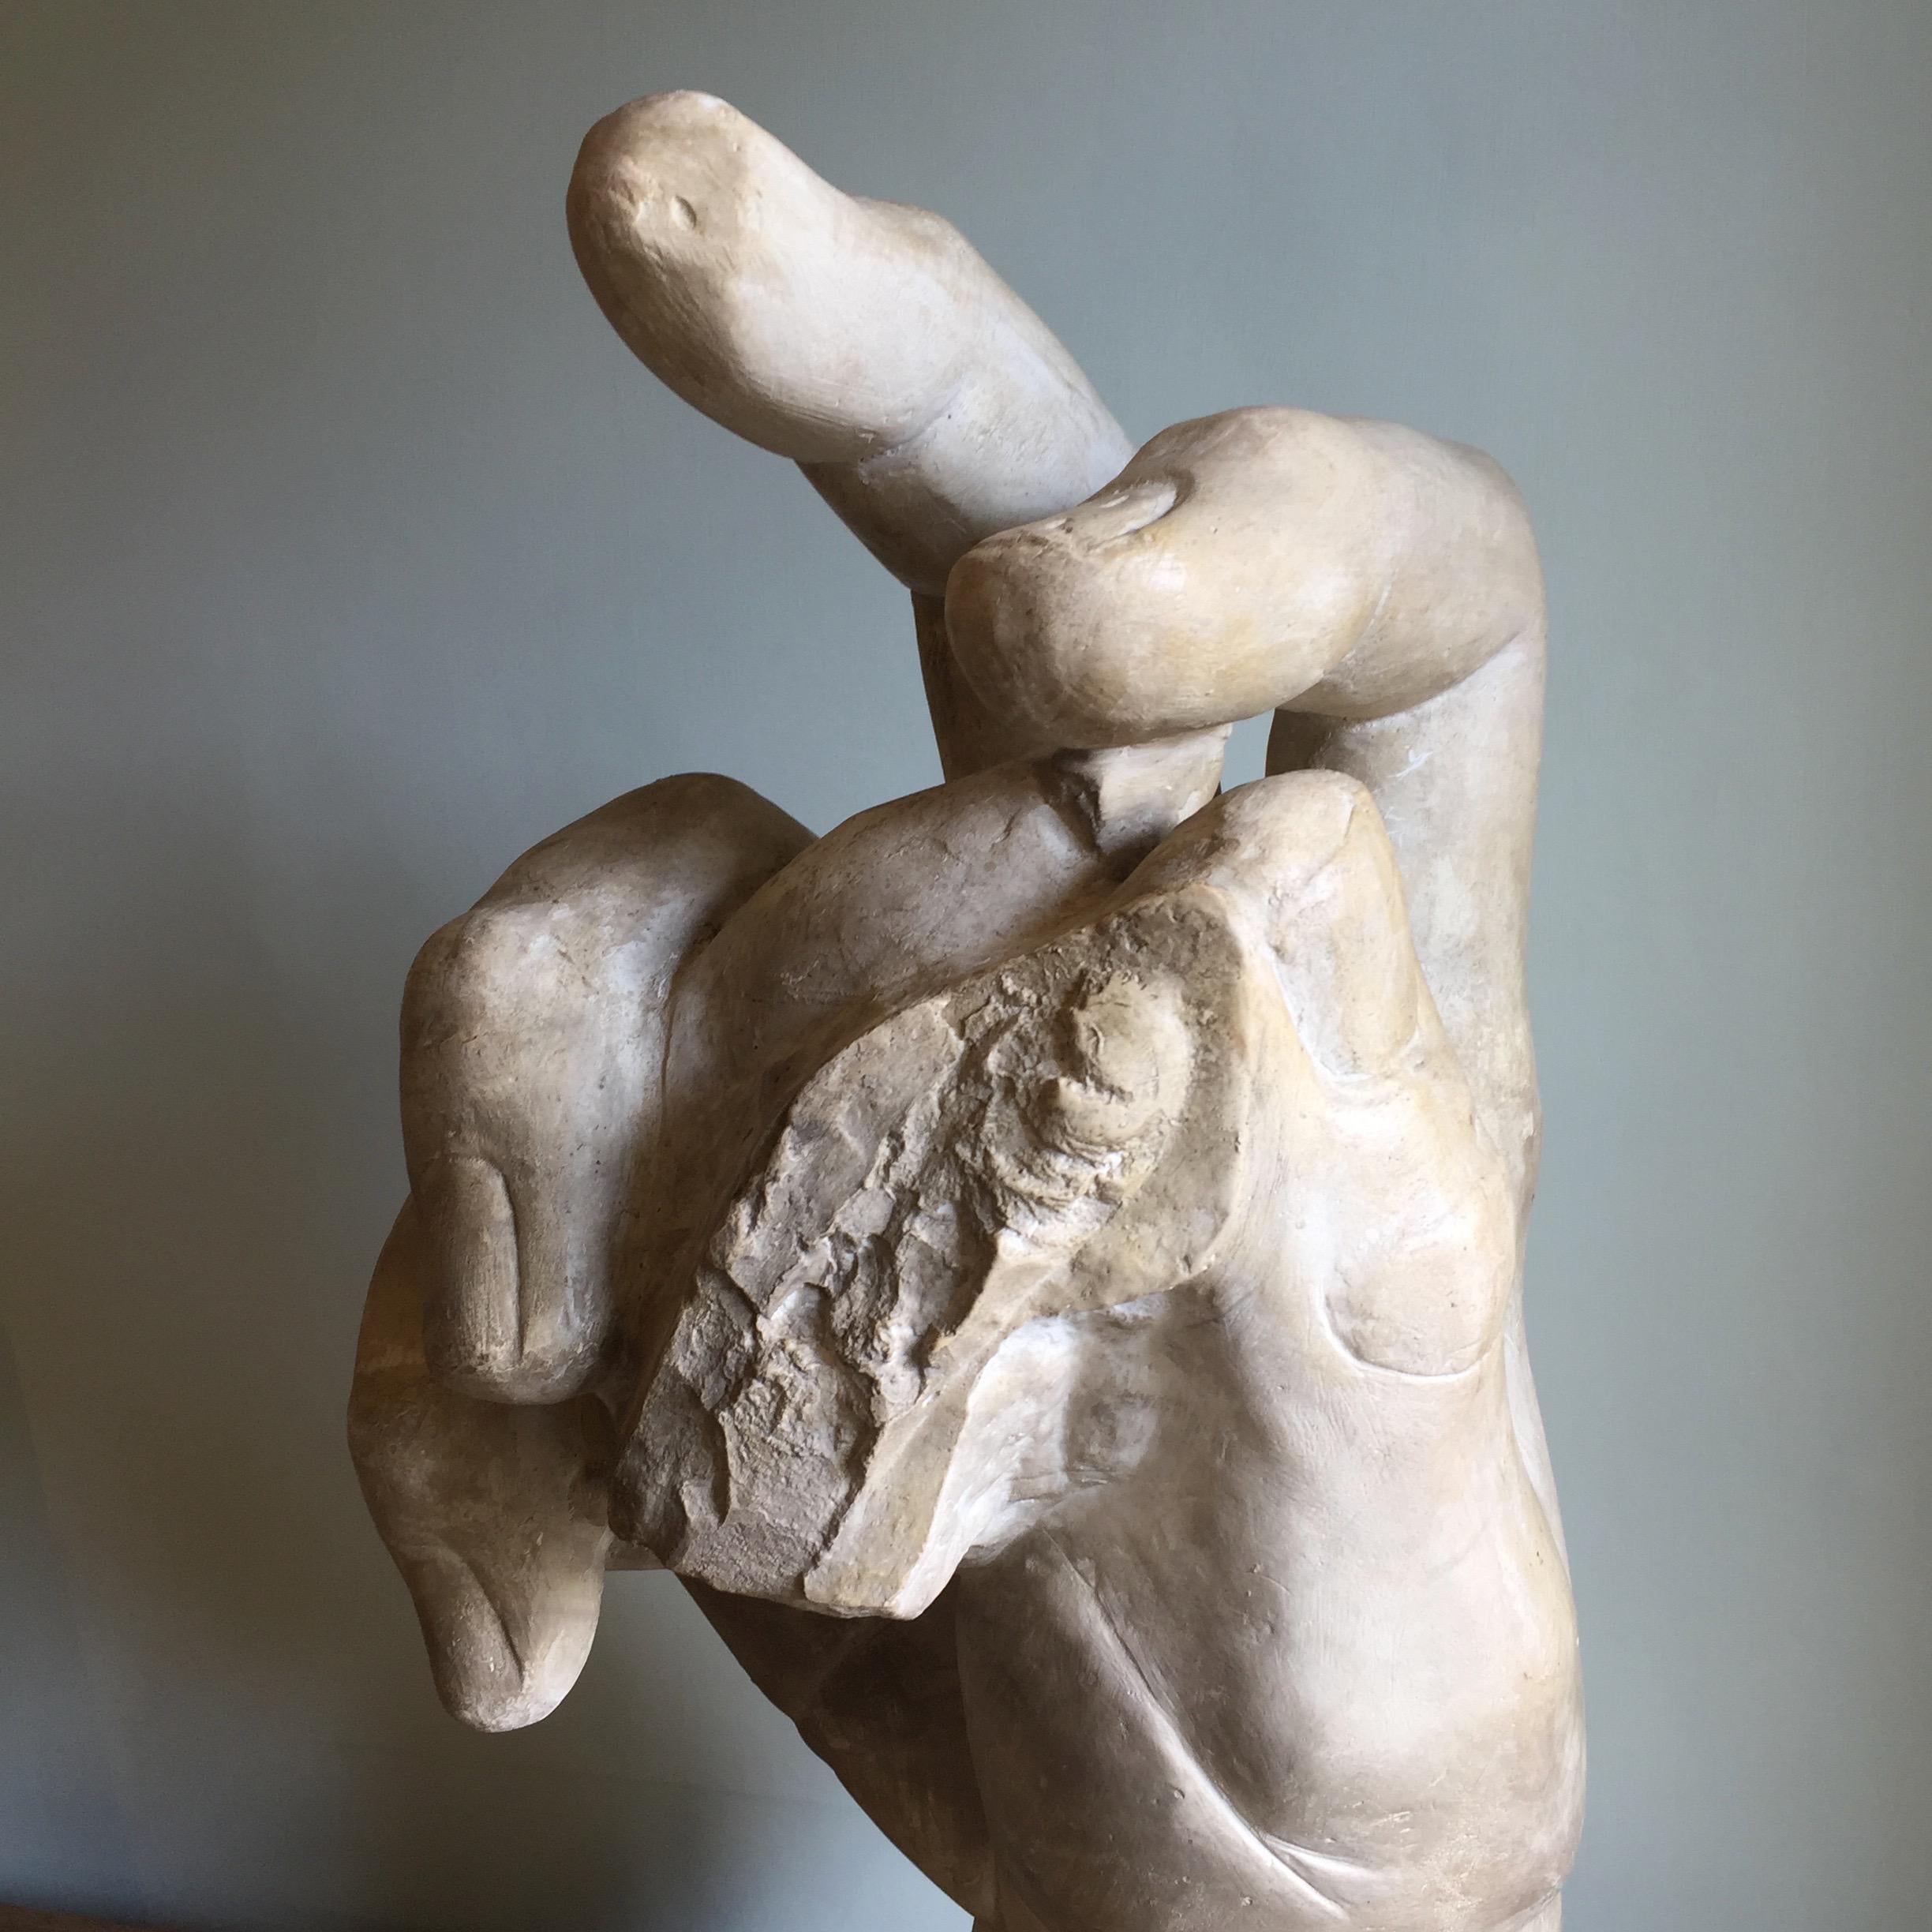 European 1:1 Scale Plaster Right Hand of Michelangelo's David